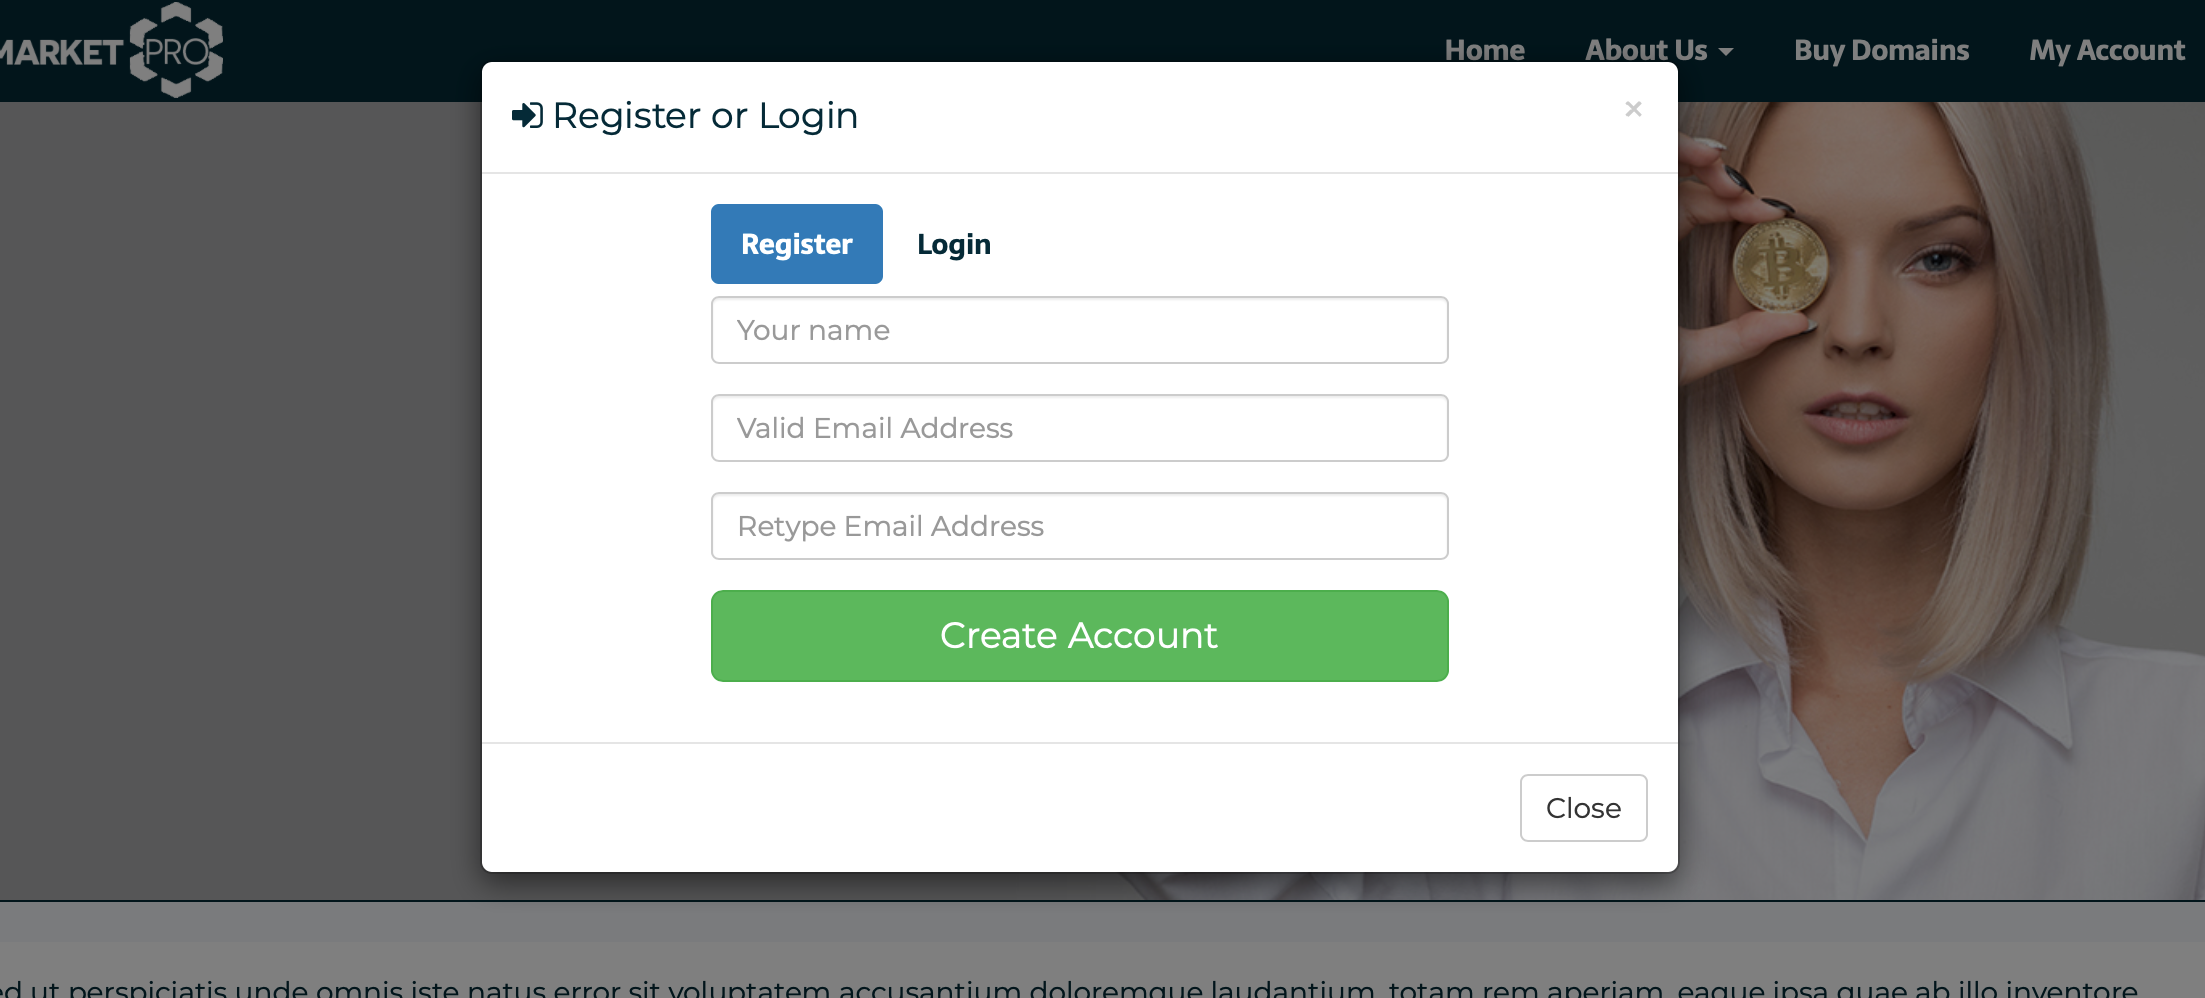 User Account feature on Domain Market Pro platform